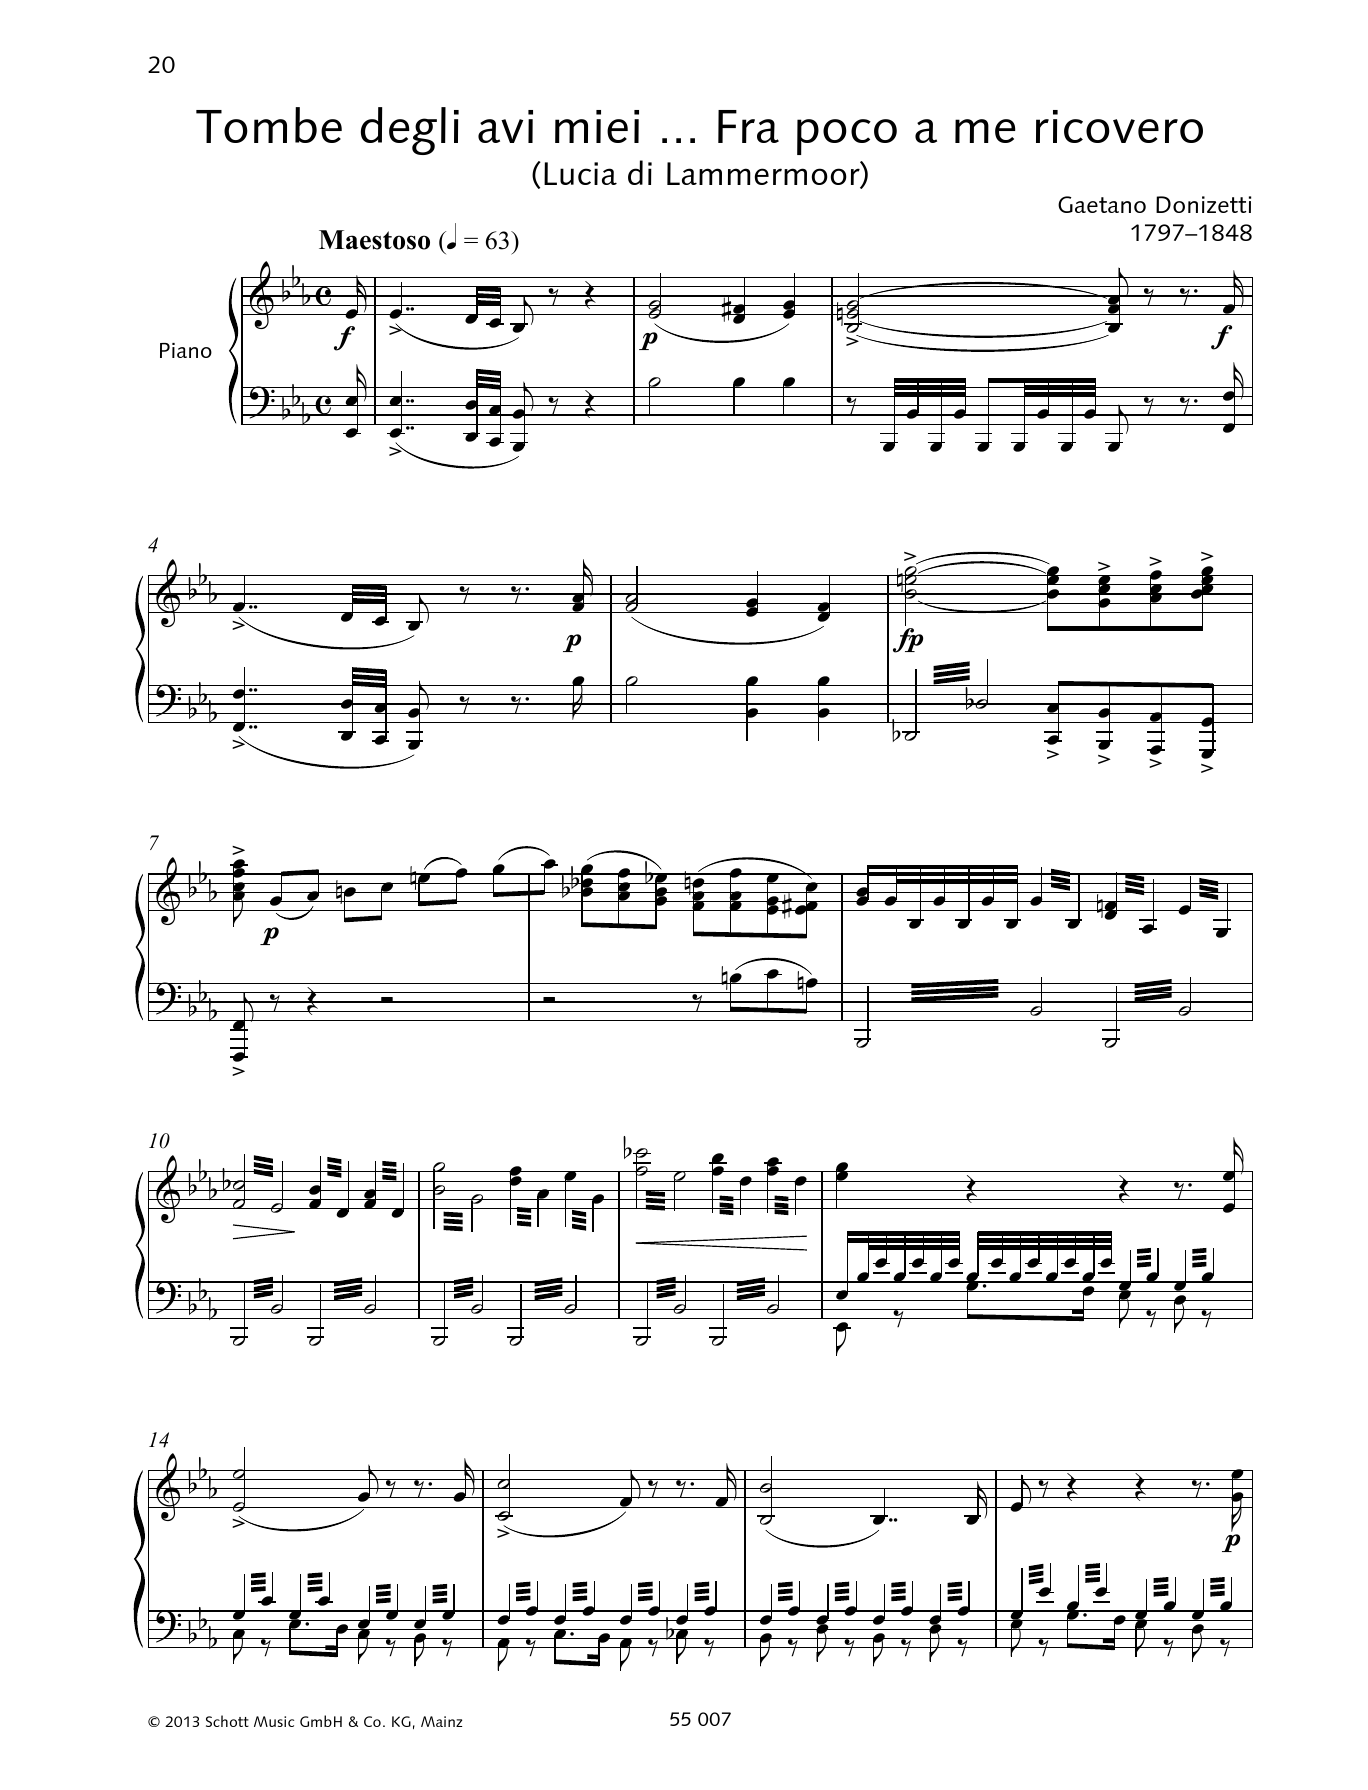 Francesca Licciarda Tombe degli avi miei Sheet Music Notes & Chords for Piano & Vocal - Download or Print PDF